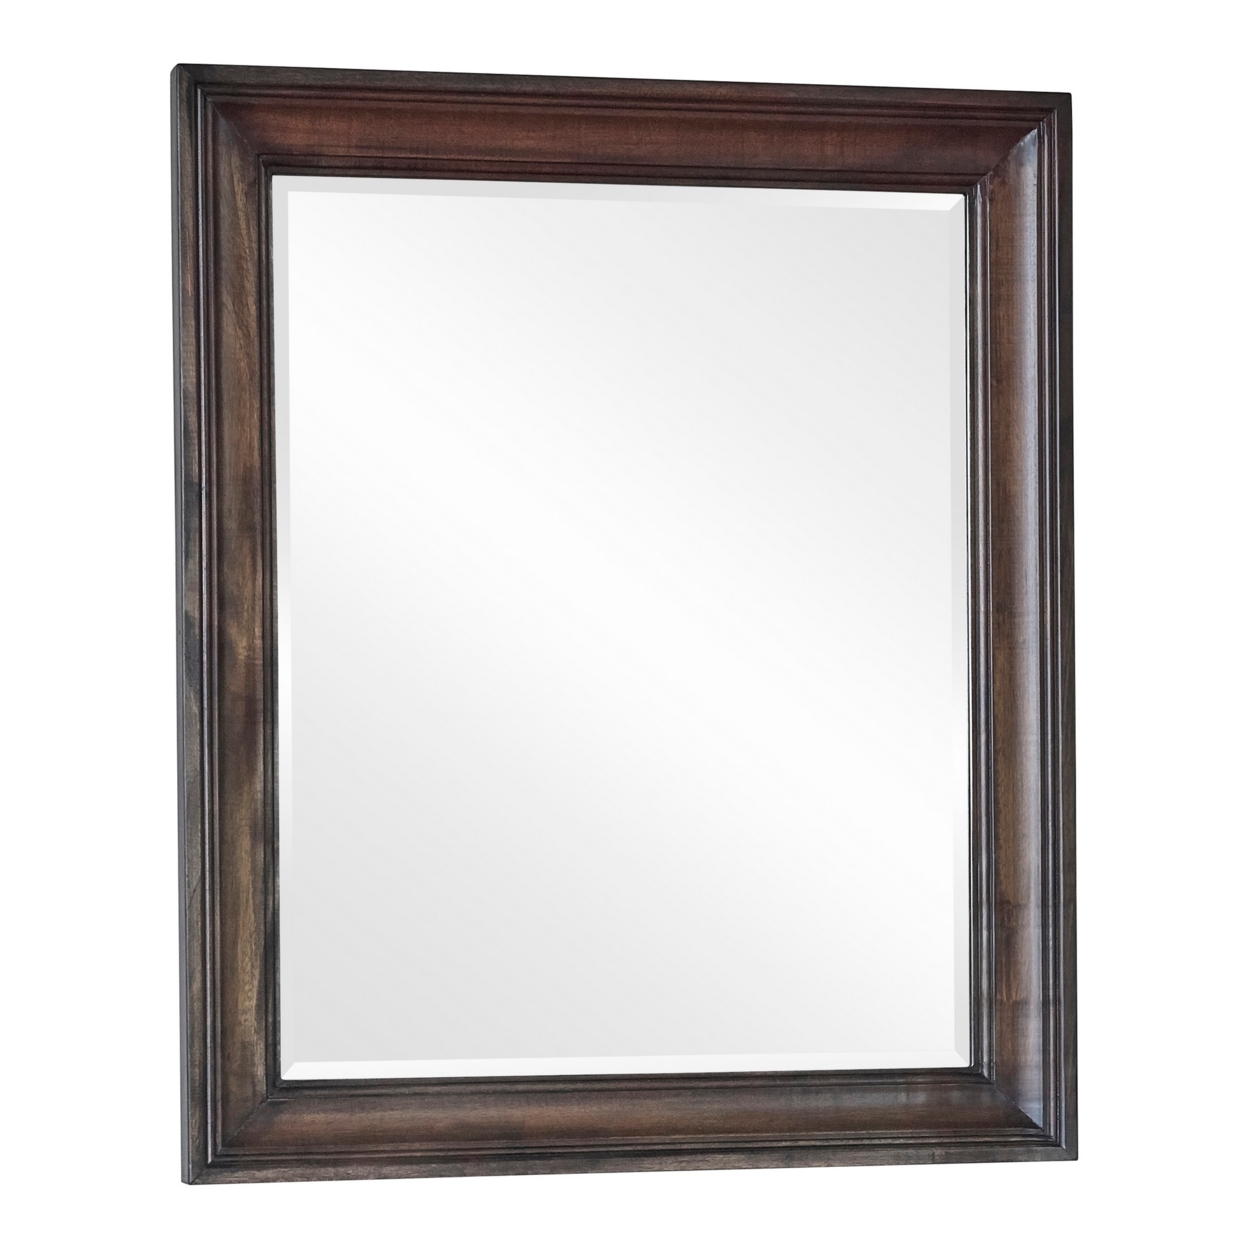 Oxy 38 Inch Classic Rectangular Portrait Mirror With Wood Frame, Brown- Saltoro Sherpi